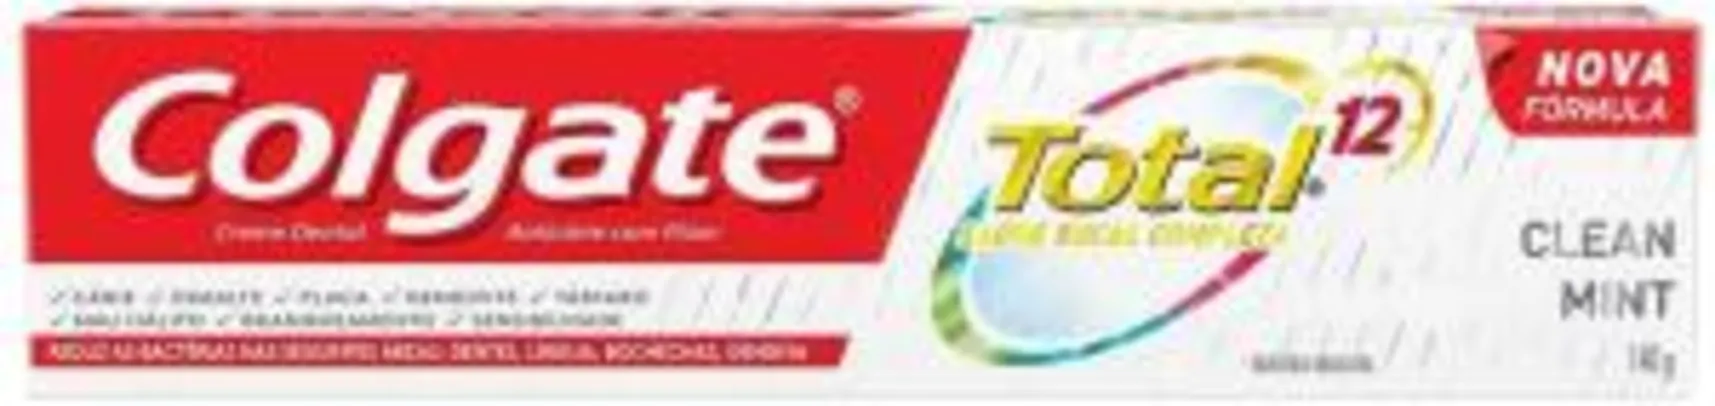 Creme Dental Colgate Total 12 Clean Mint 140g | R$8